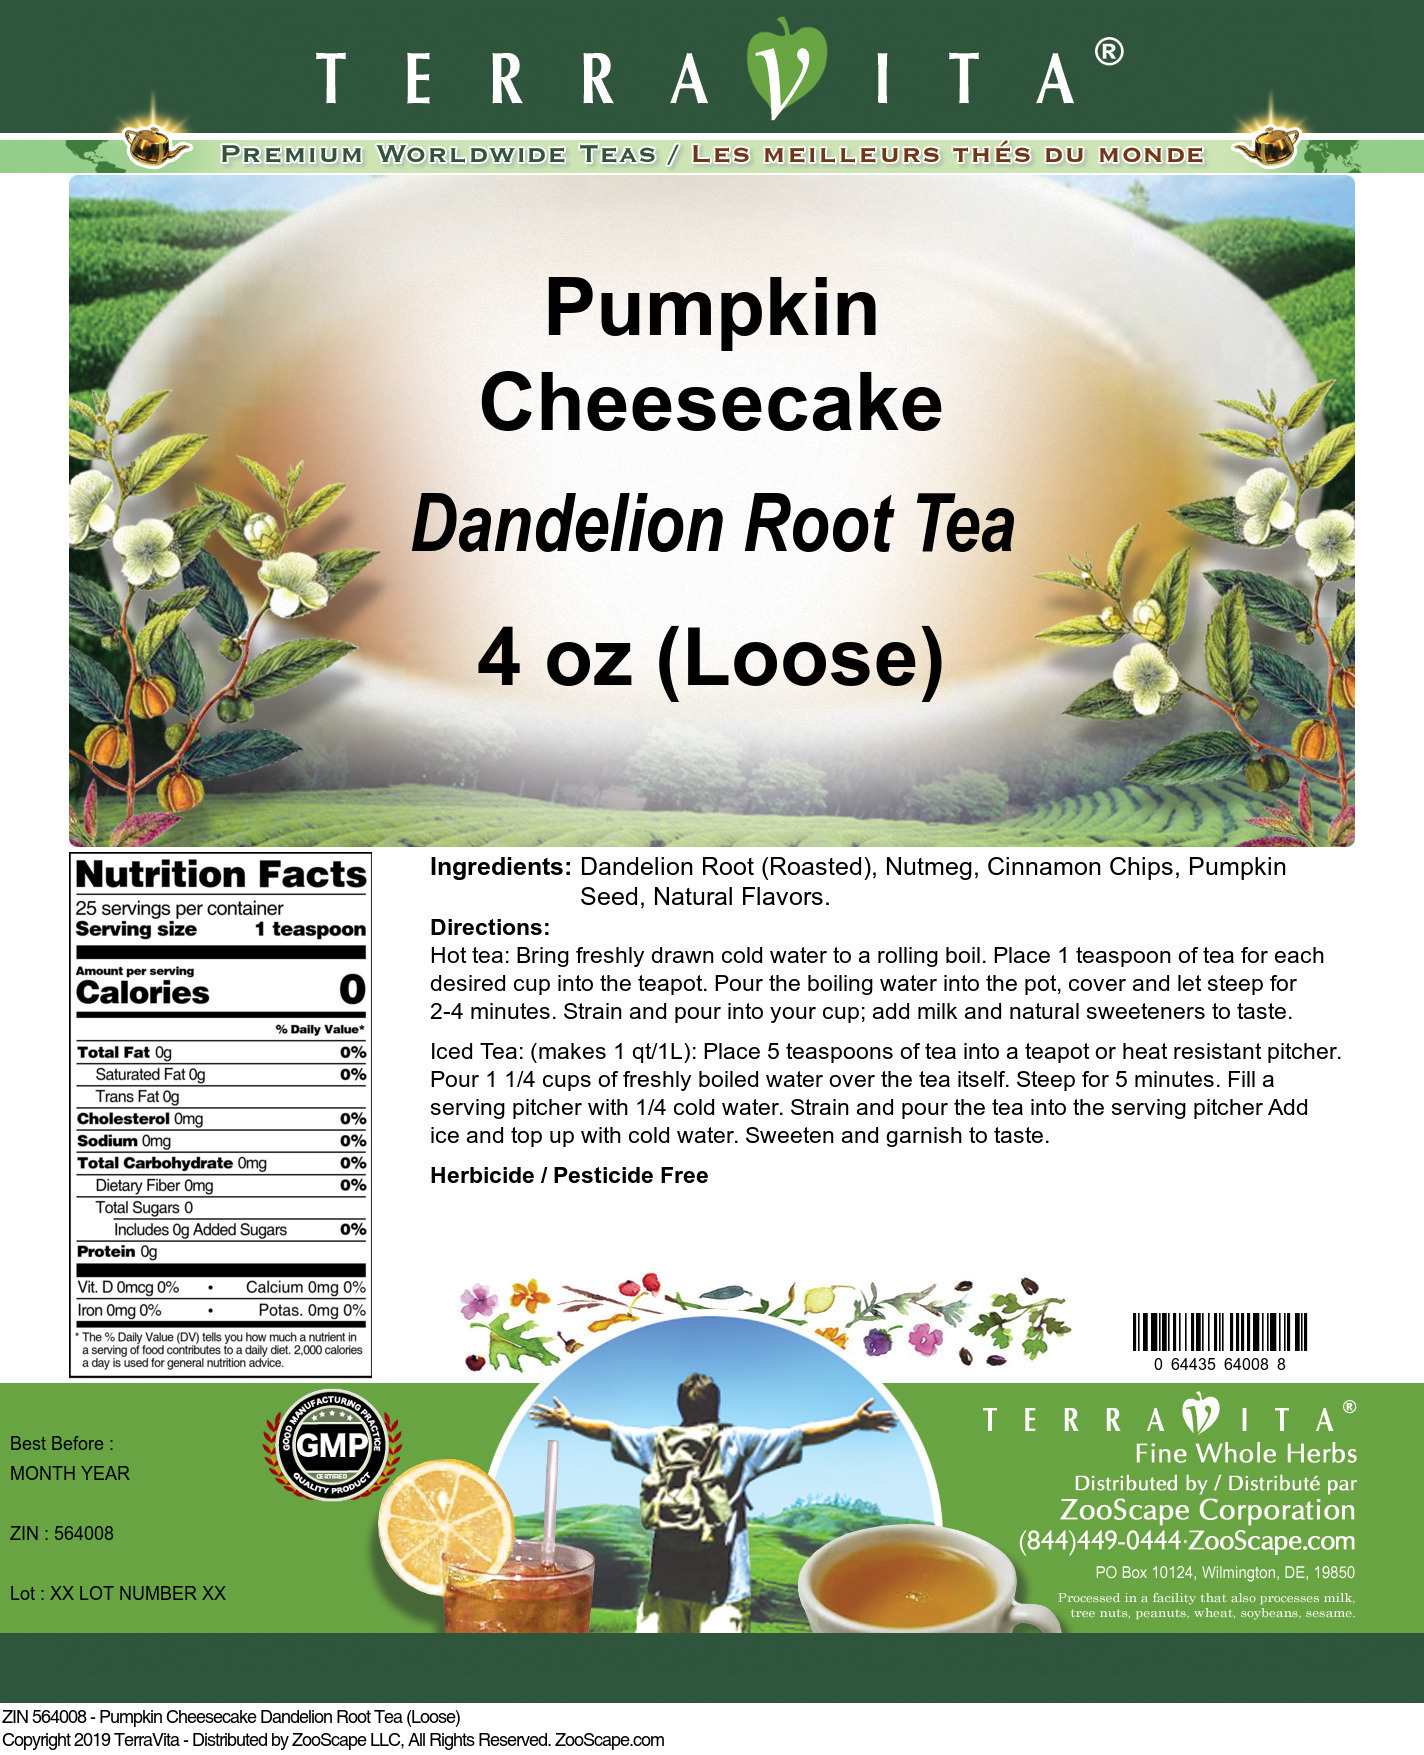 Pumpkin Cheesecake Dandelion Root Tea (Loose) - Label